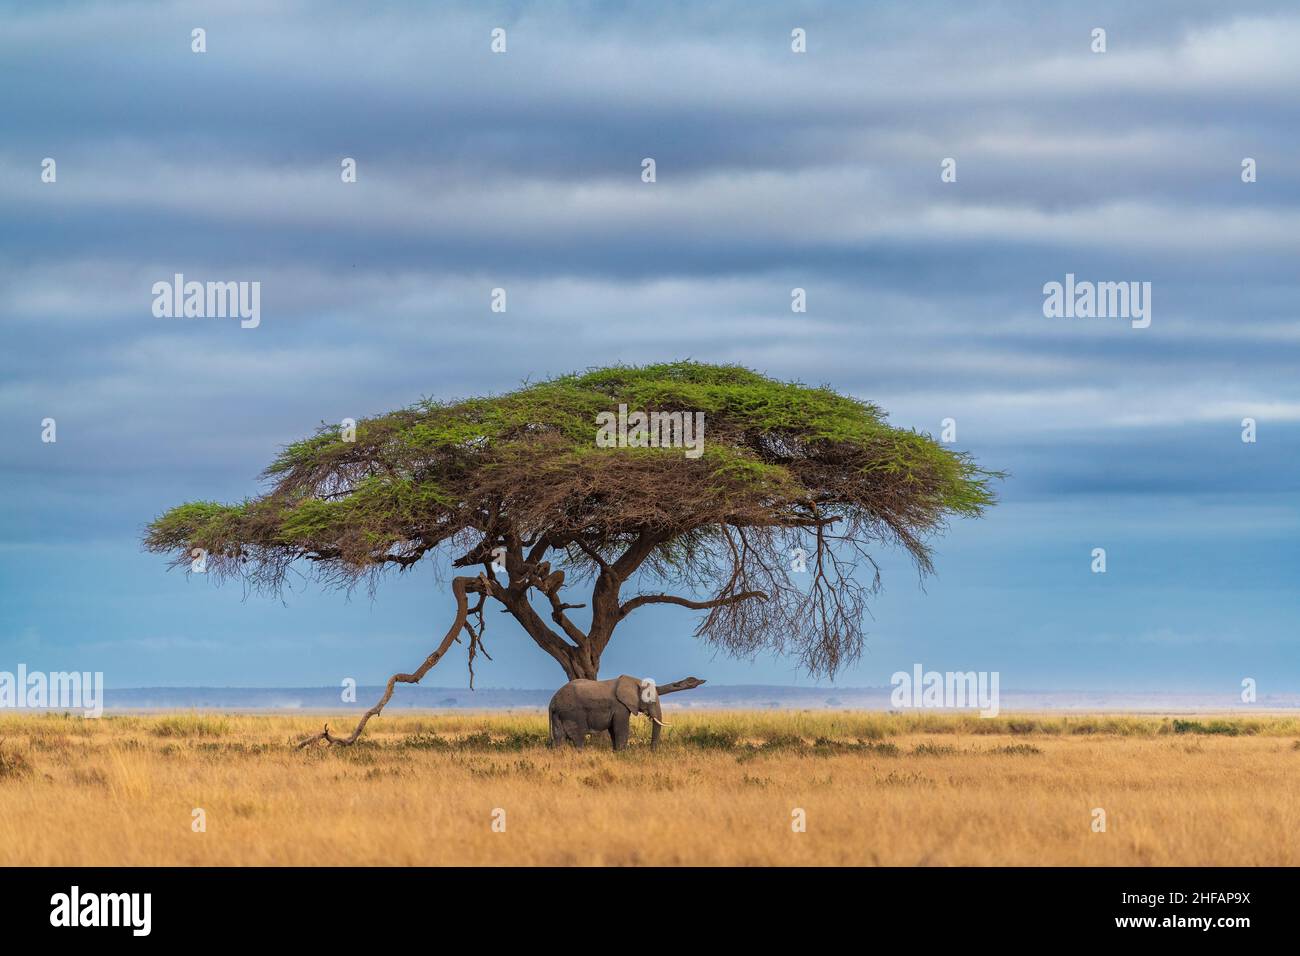 An African savanna elephant rests under a tree at Amboseli National Park, Kenya Stock Photo